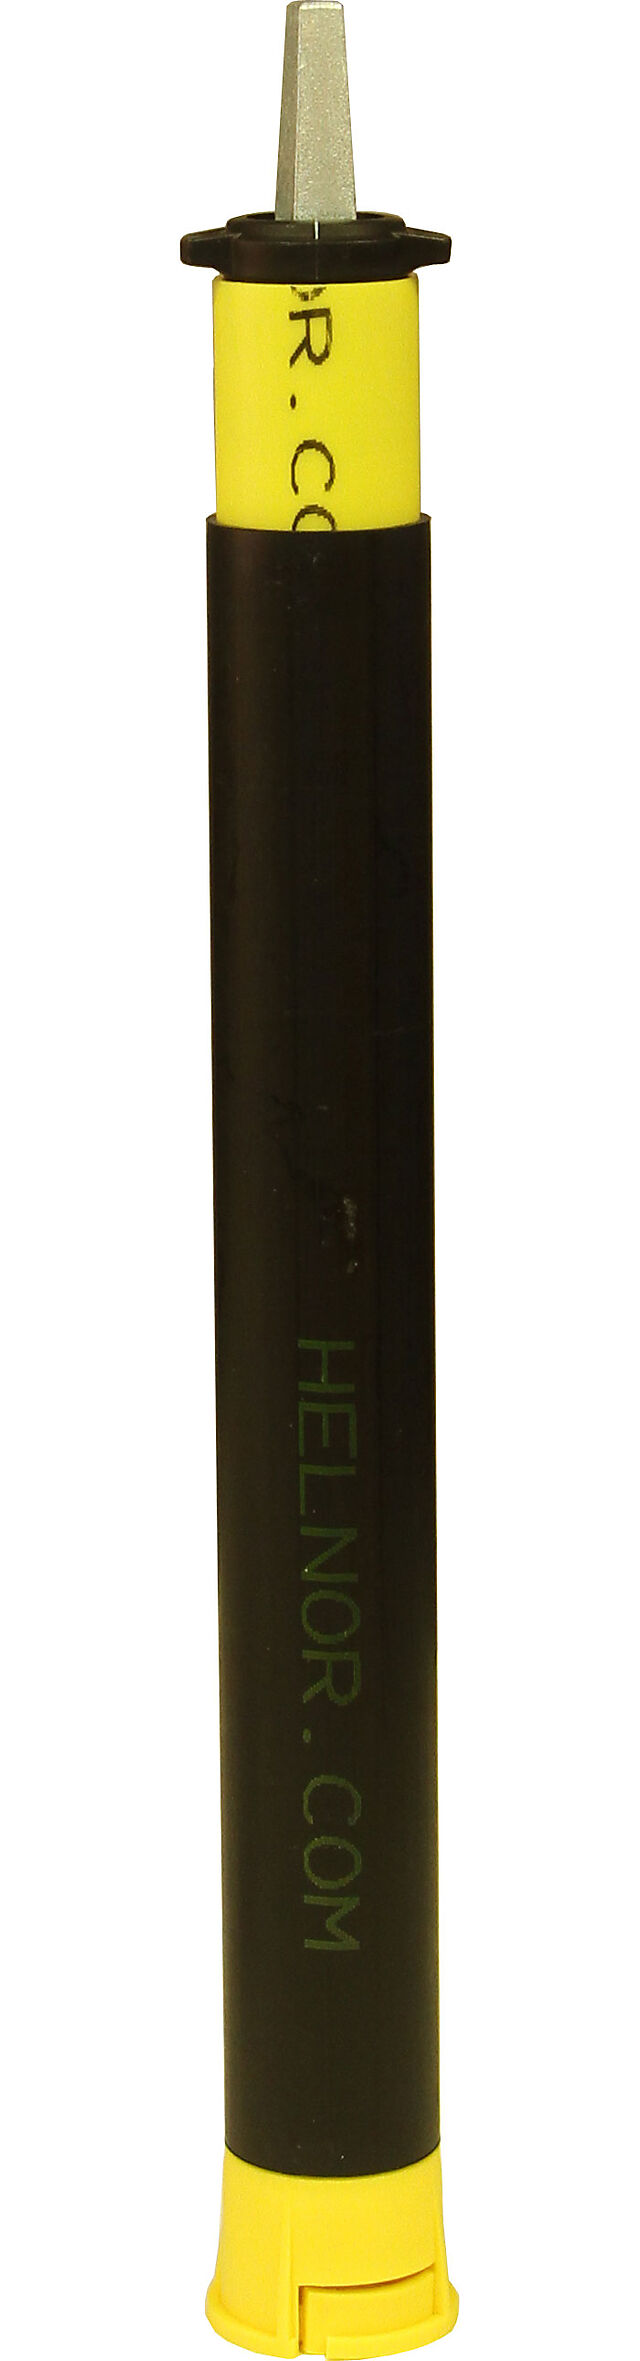 Helnor Spindelforlenger 46 - 65 cm XS0 Helnor 1